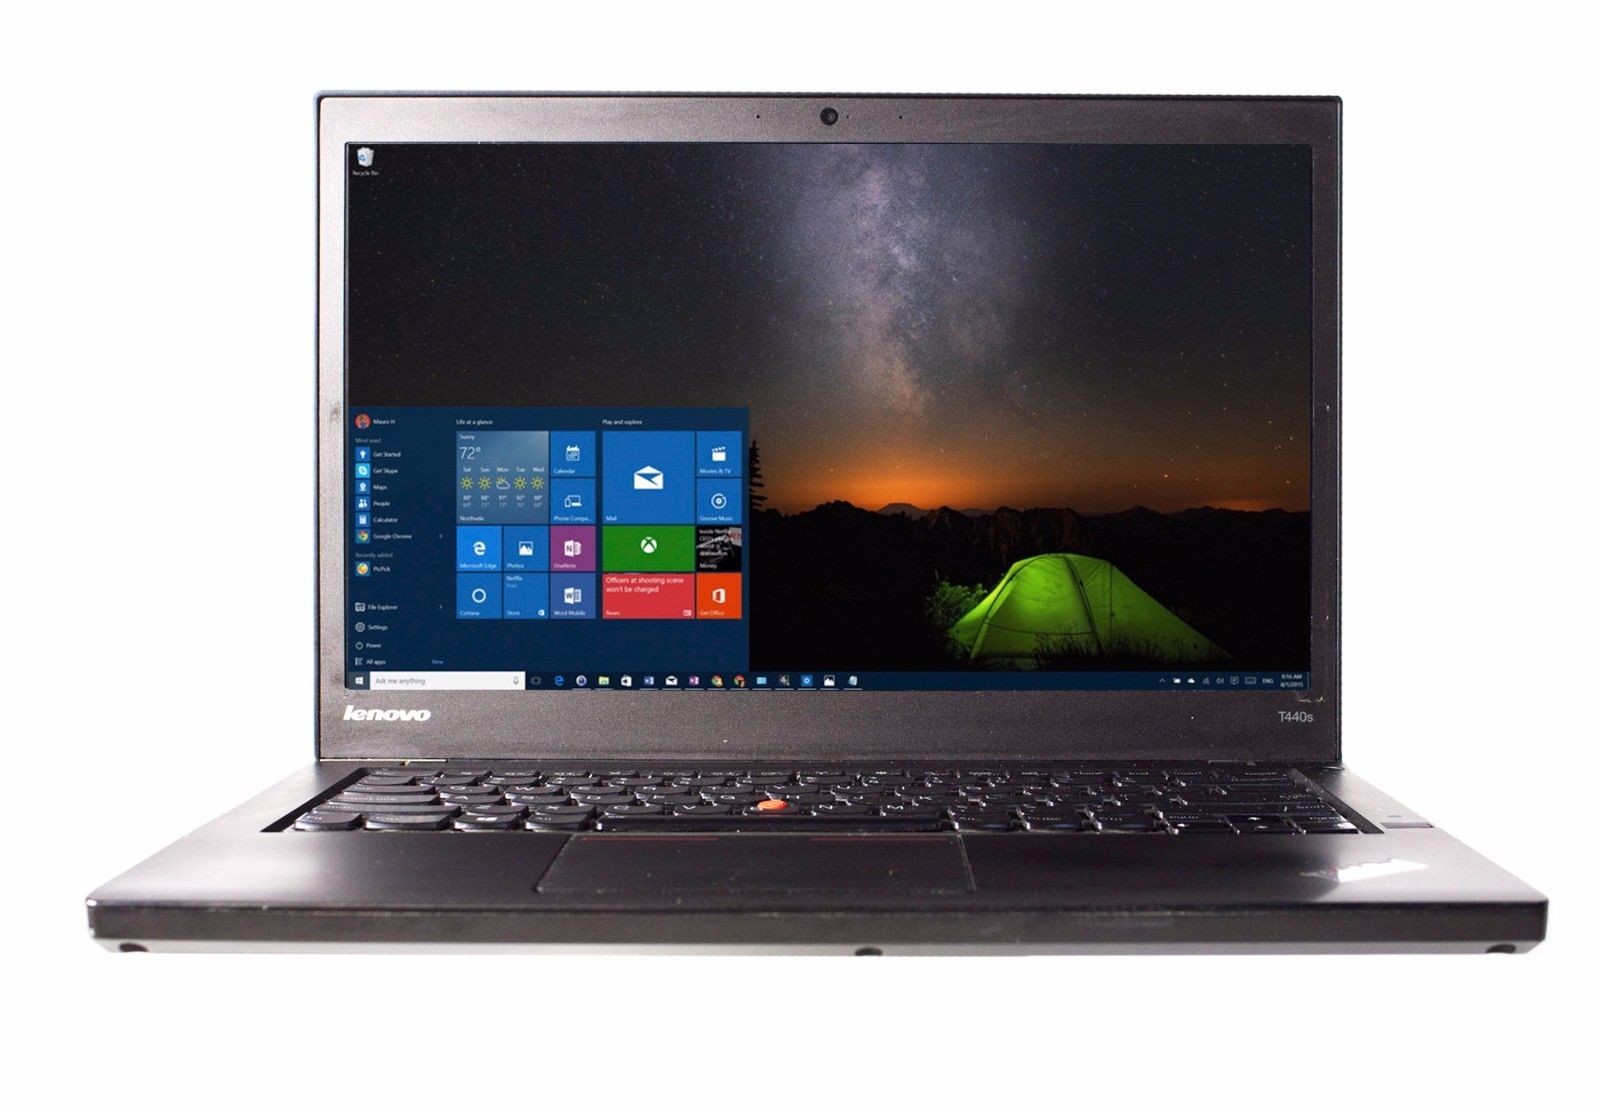 LEN-TP-T440S-i5-Lenovo ThinkPad T440s Refurbished Ultrabook Laptop Intel Core i5 14-inch Screen 750GB HDD 8GB RAM Windows 10 Pro-image